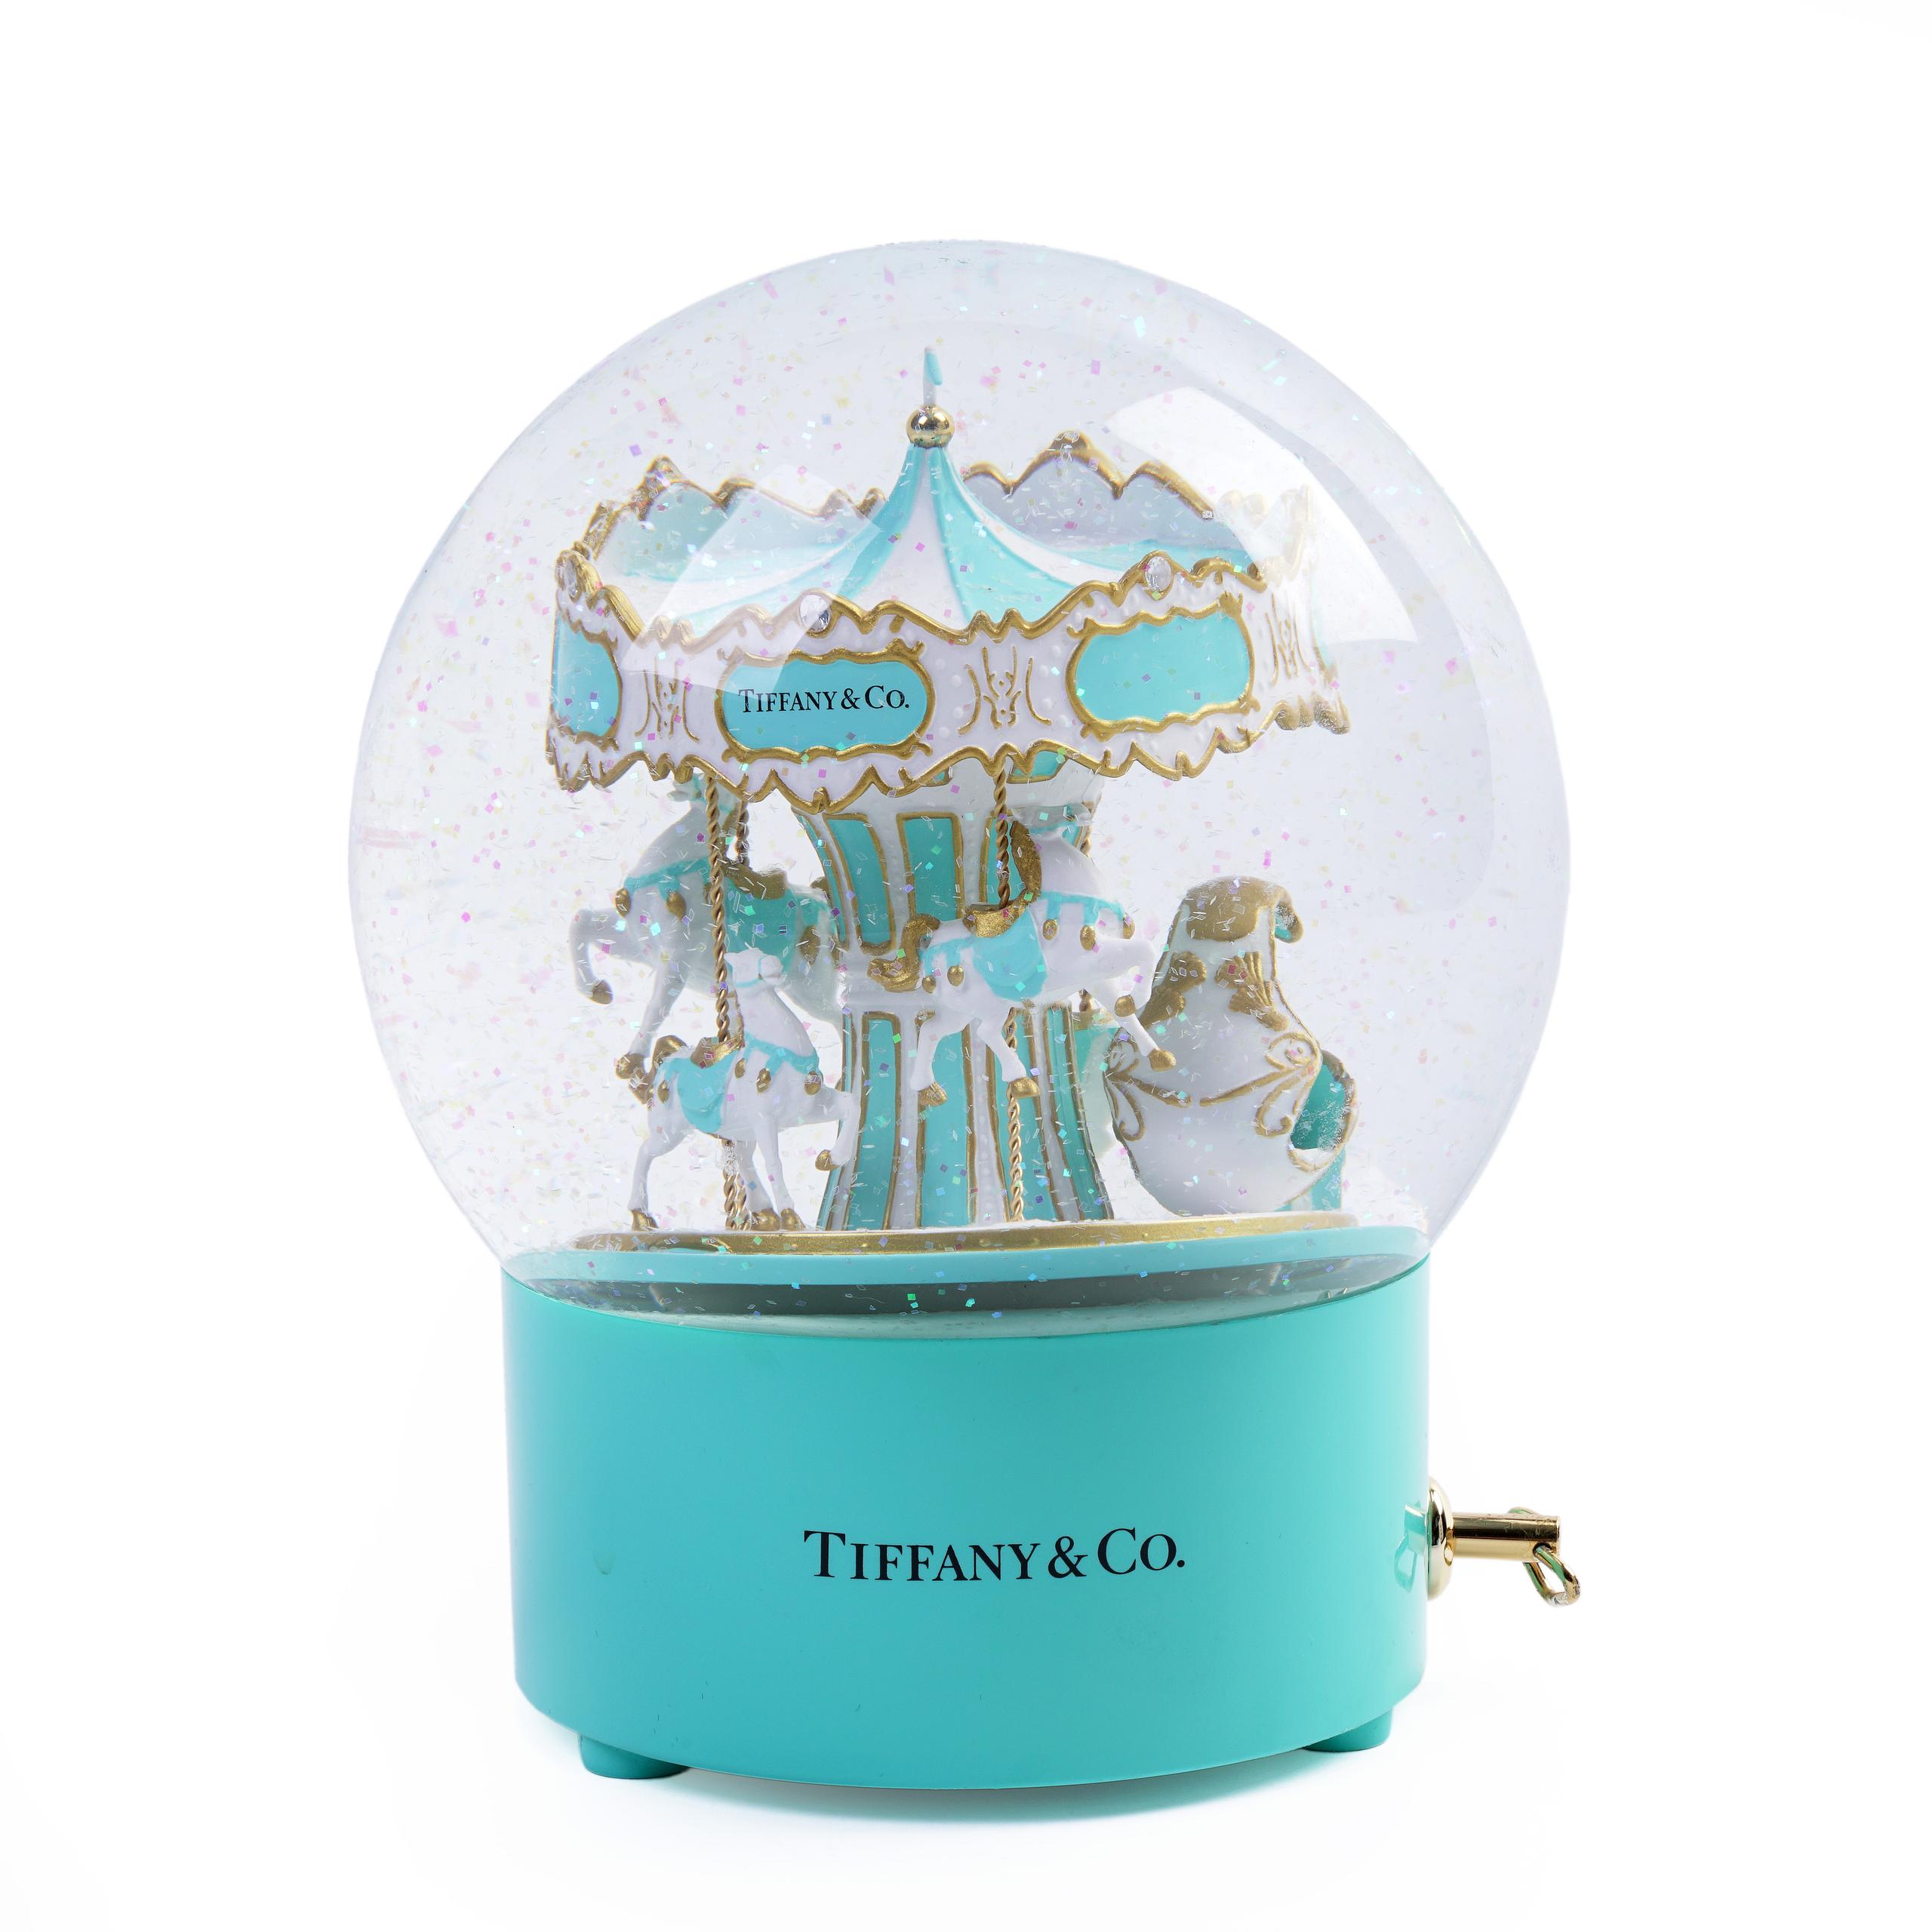 TIFFANY & CO. Rare Carousel Music Box / Snow-globe Limited Edition